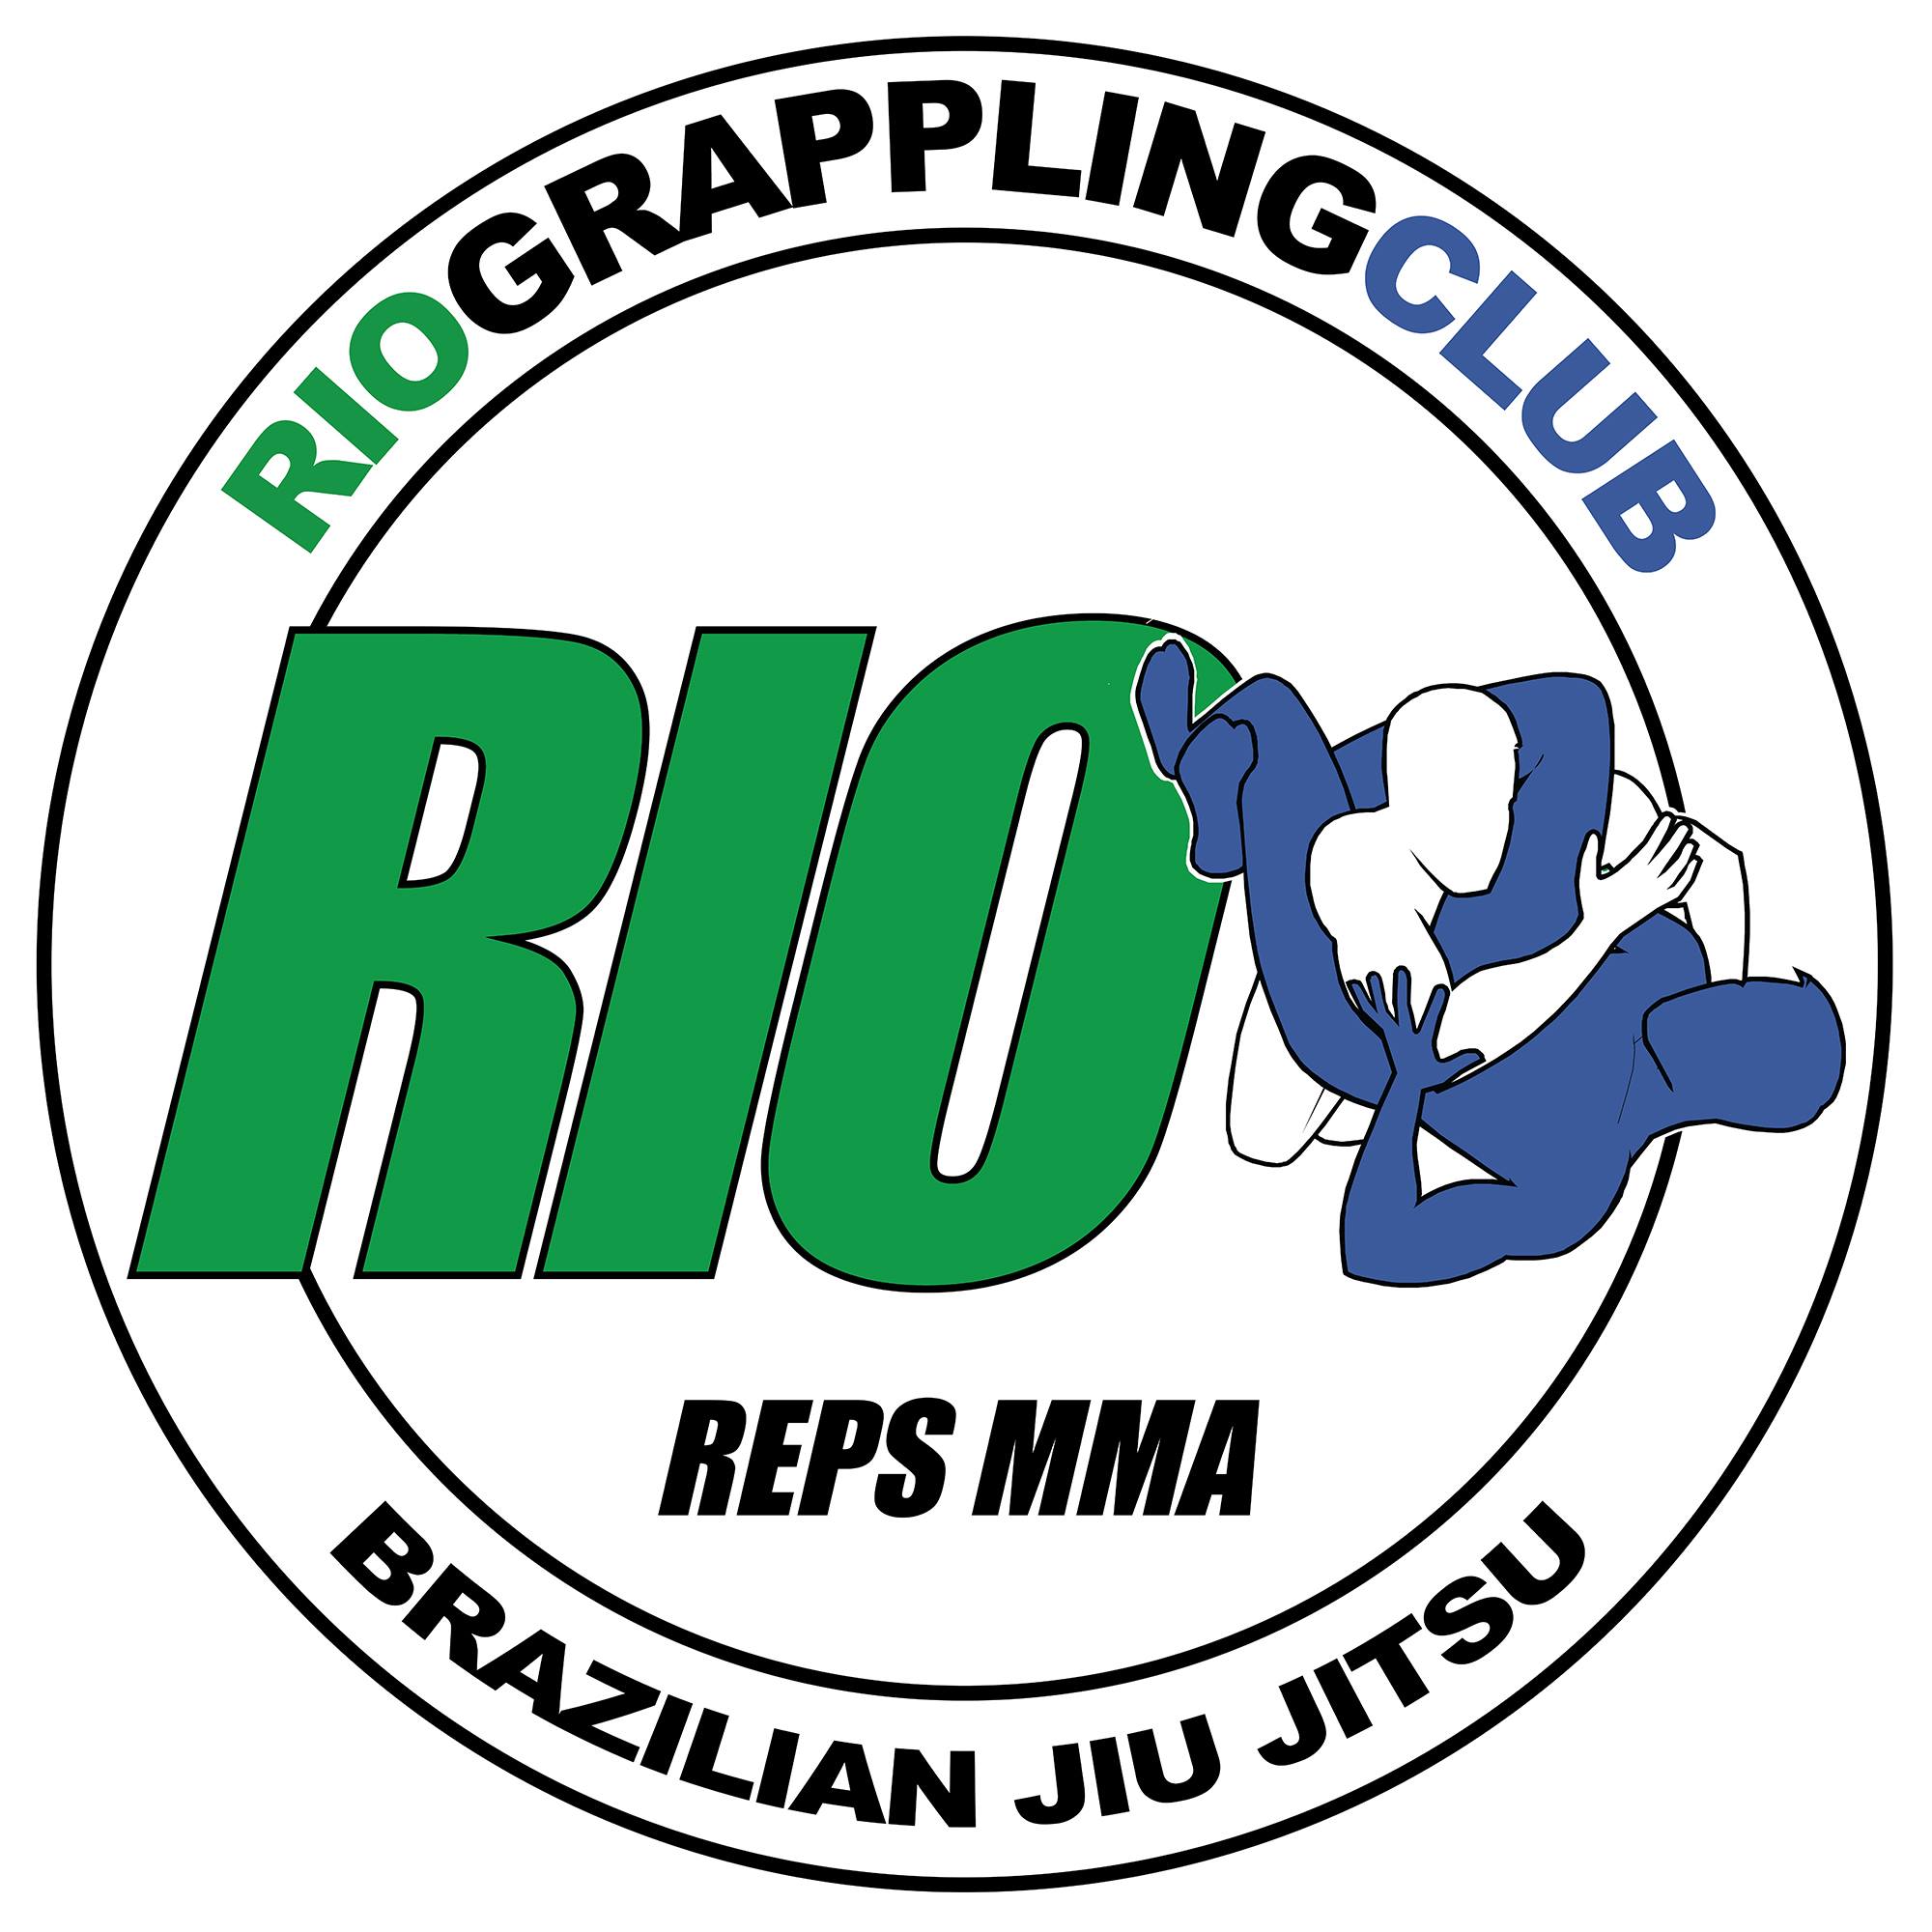 Rio Grappling Club REPS MMA